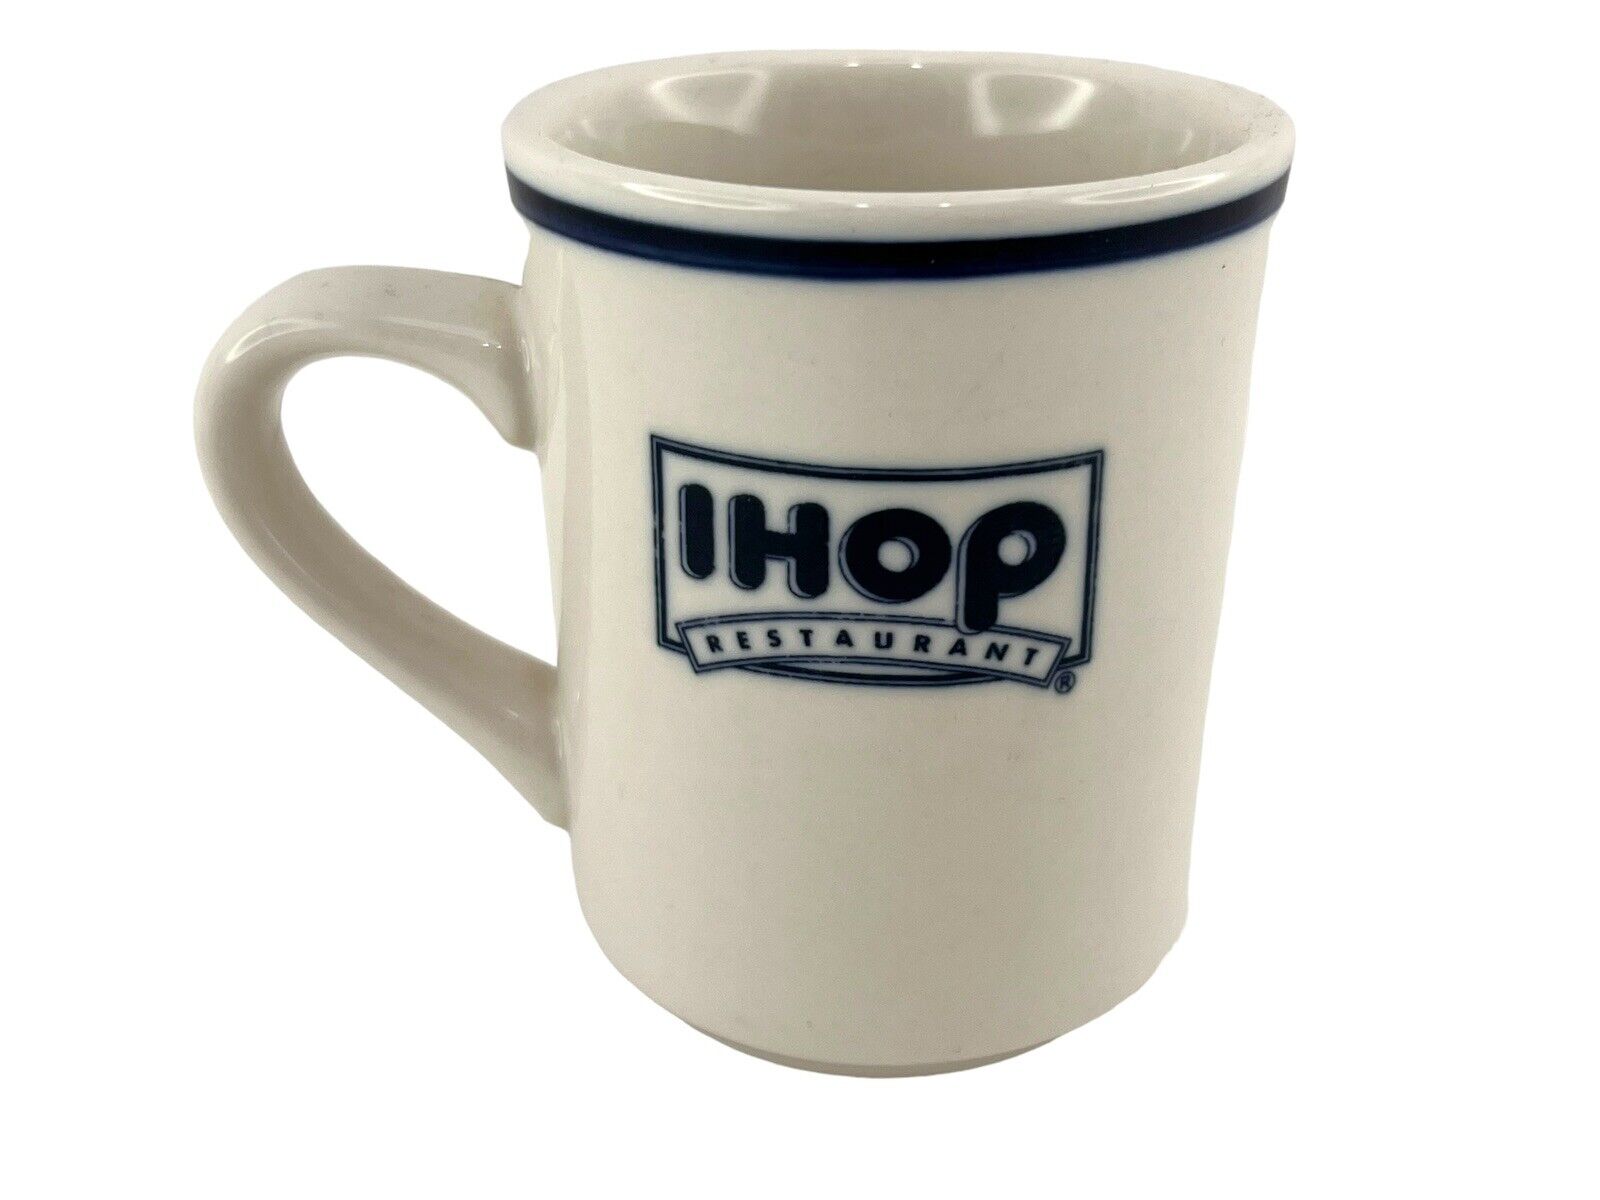 IHOP Restaurant Diner White Coffee Cup Mug Ceramic Delco International Pancake